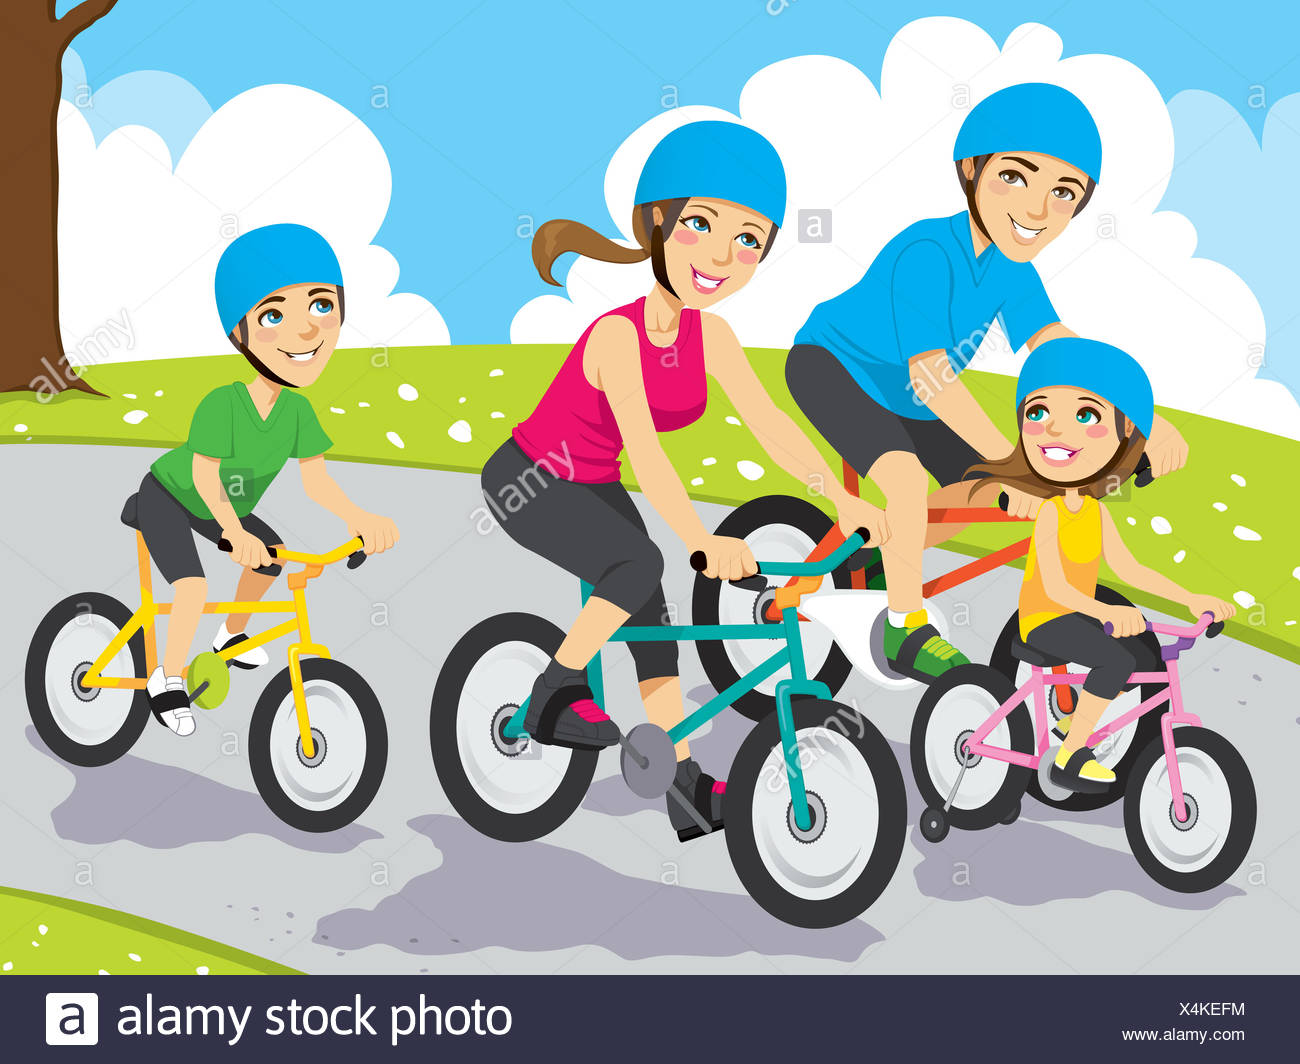 Illustration Family Riding Bicycle Stock Photos & Illustration Family ...